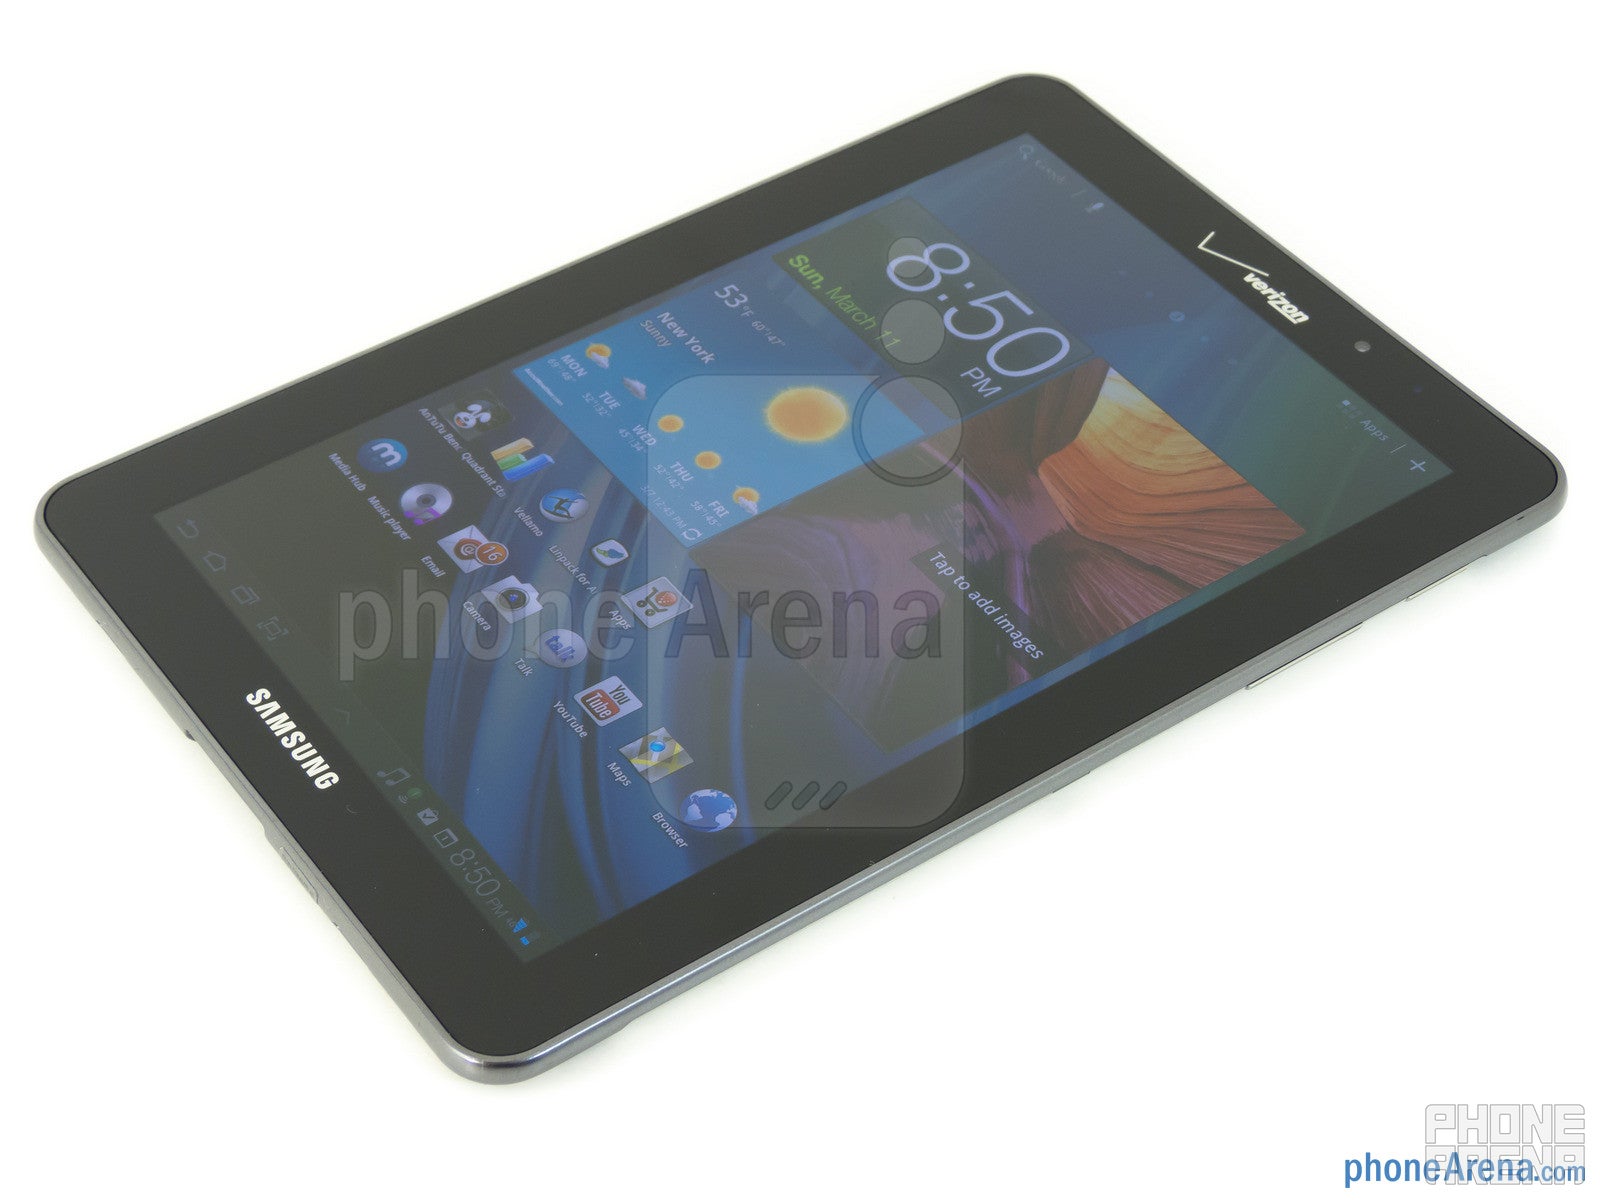 Samsung Galaxy Tab 7.7 LTE Review